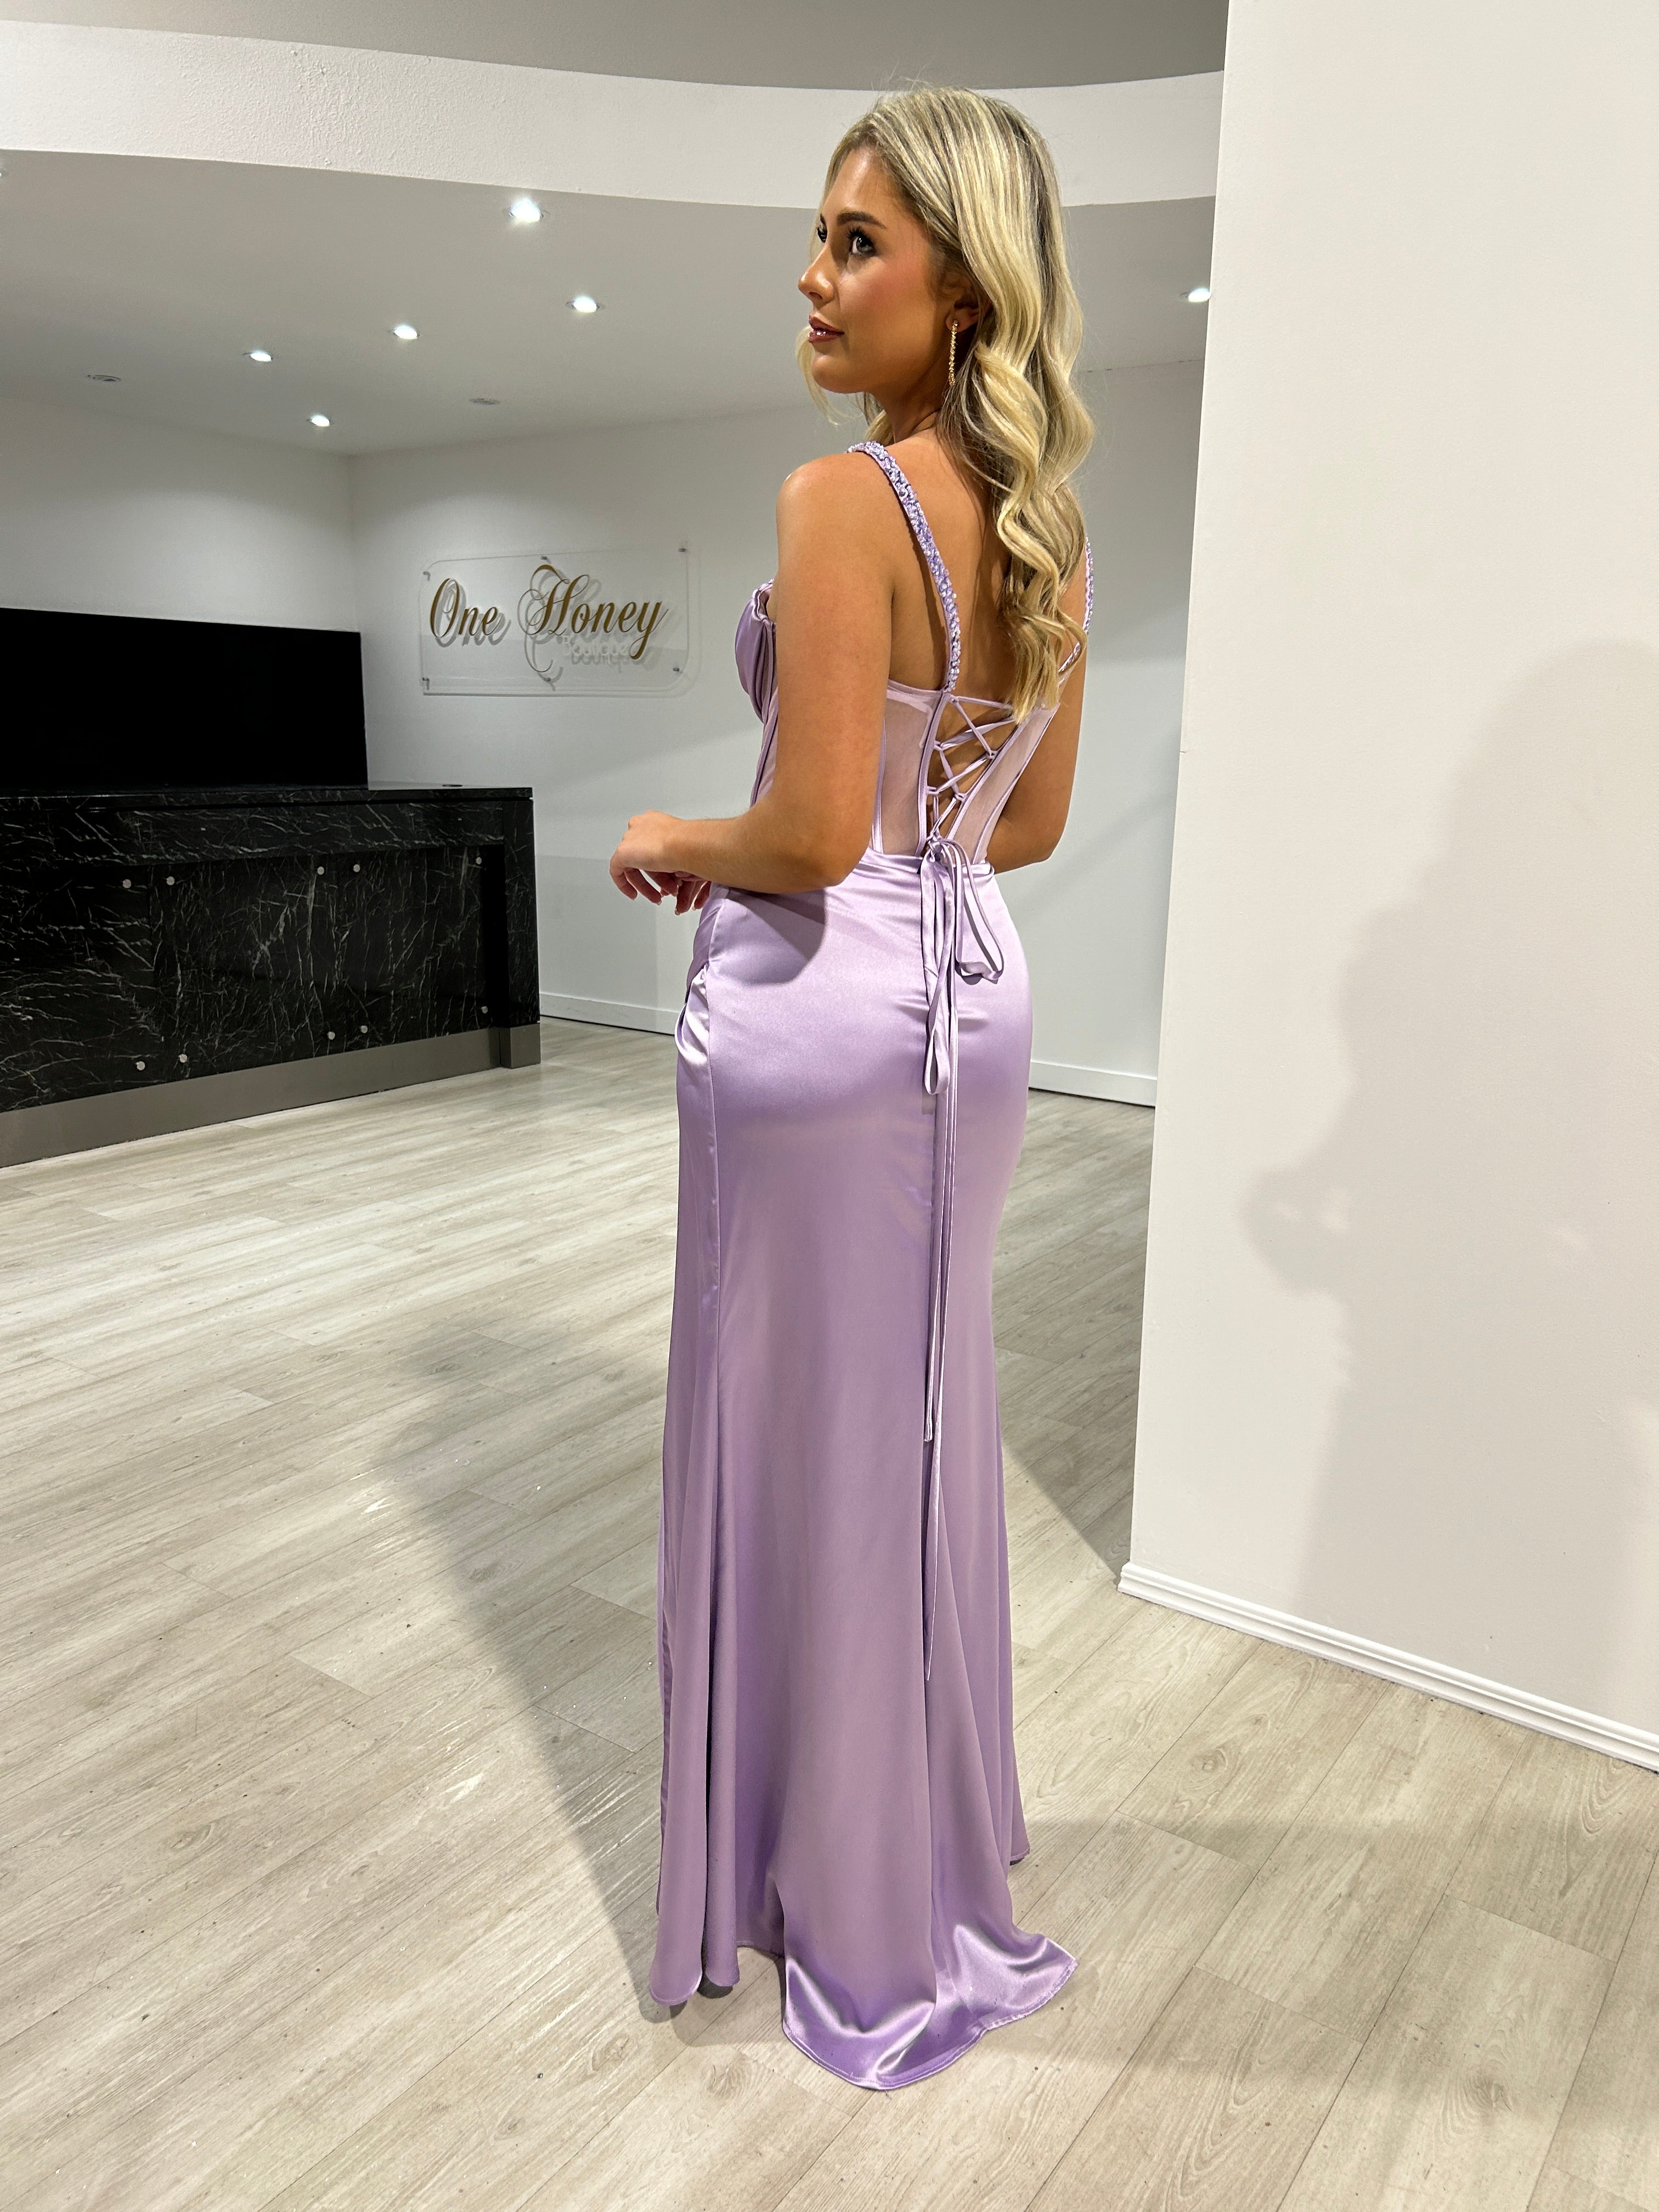 Honey Couture KAT Lavender Satin Beaded Detail Corset Bustier Formal Dress